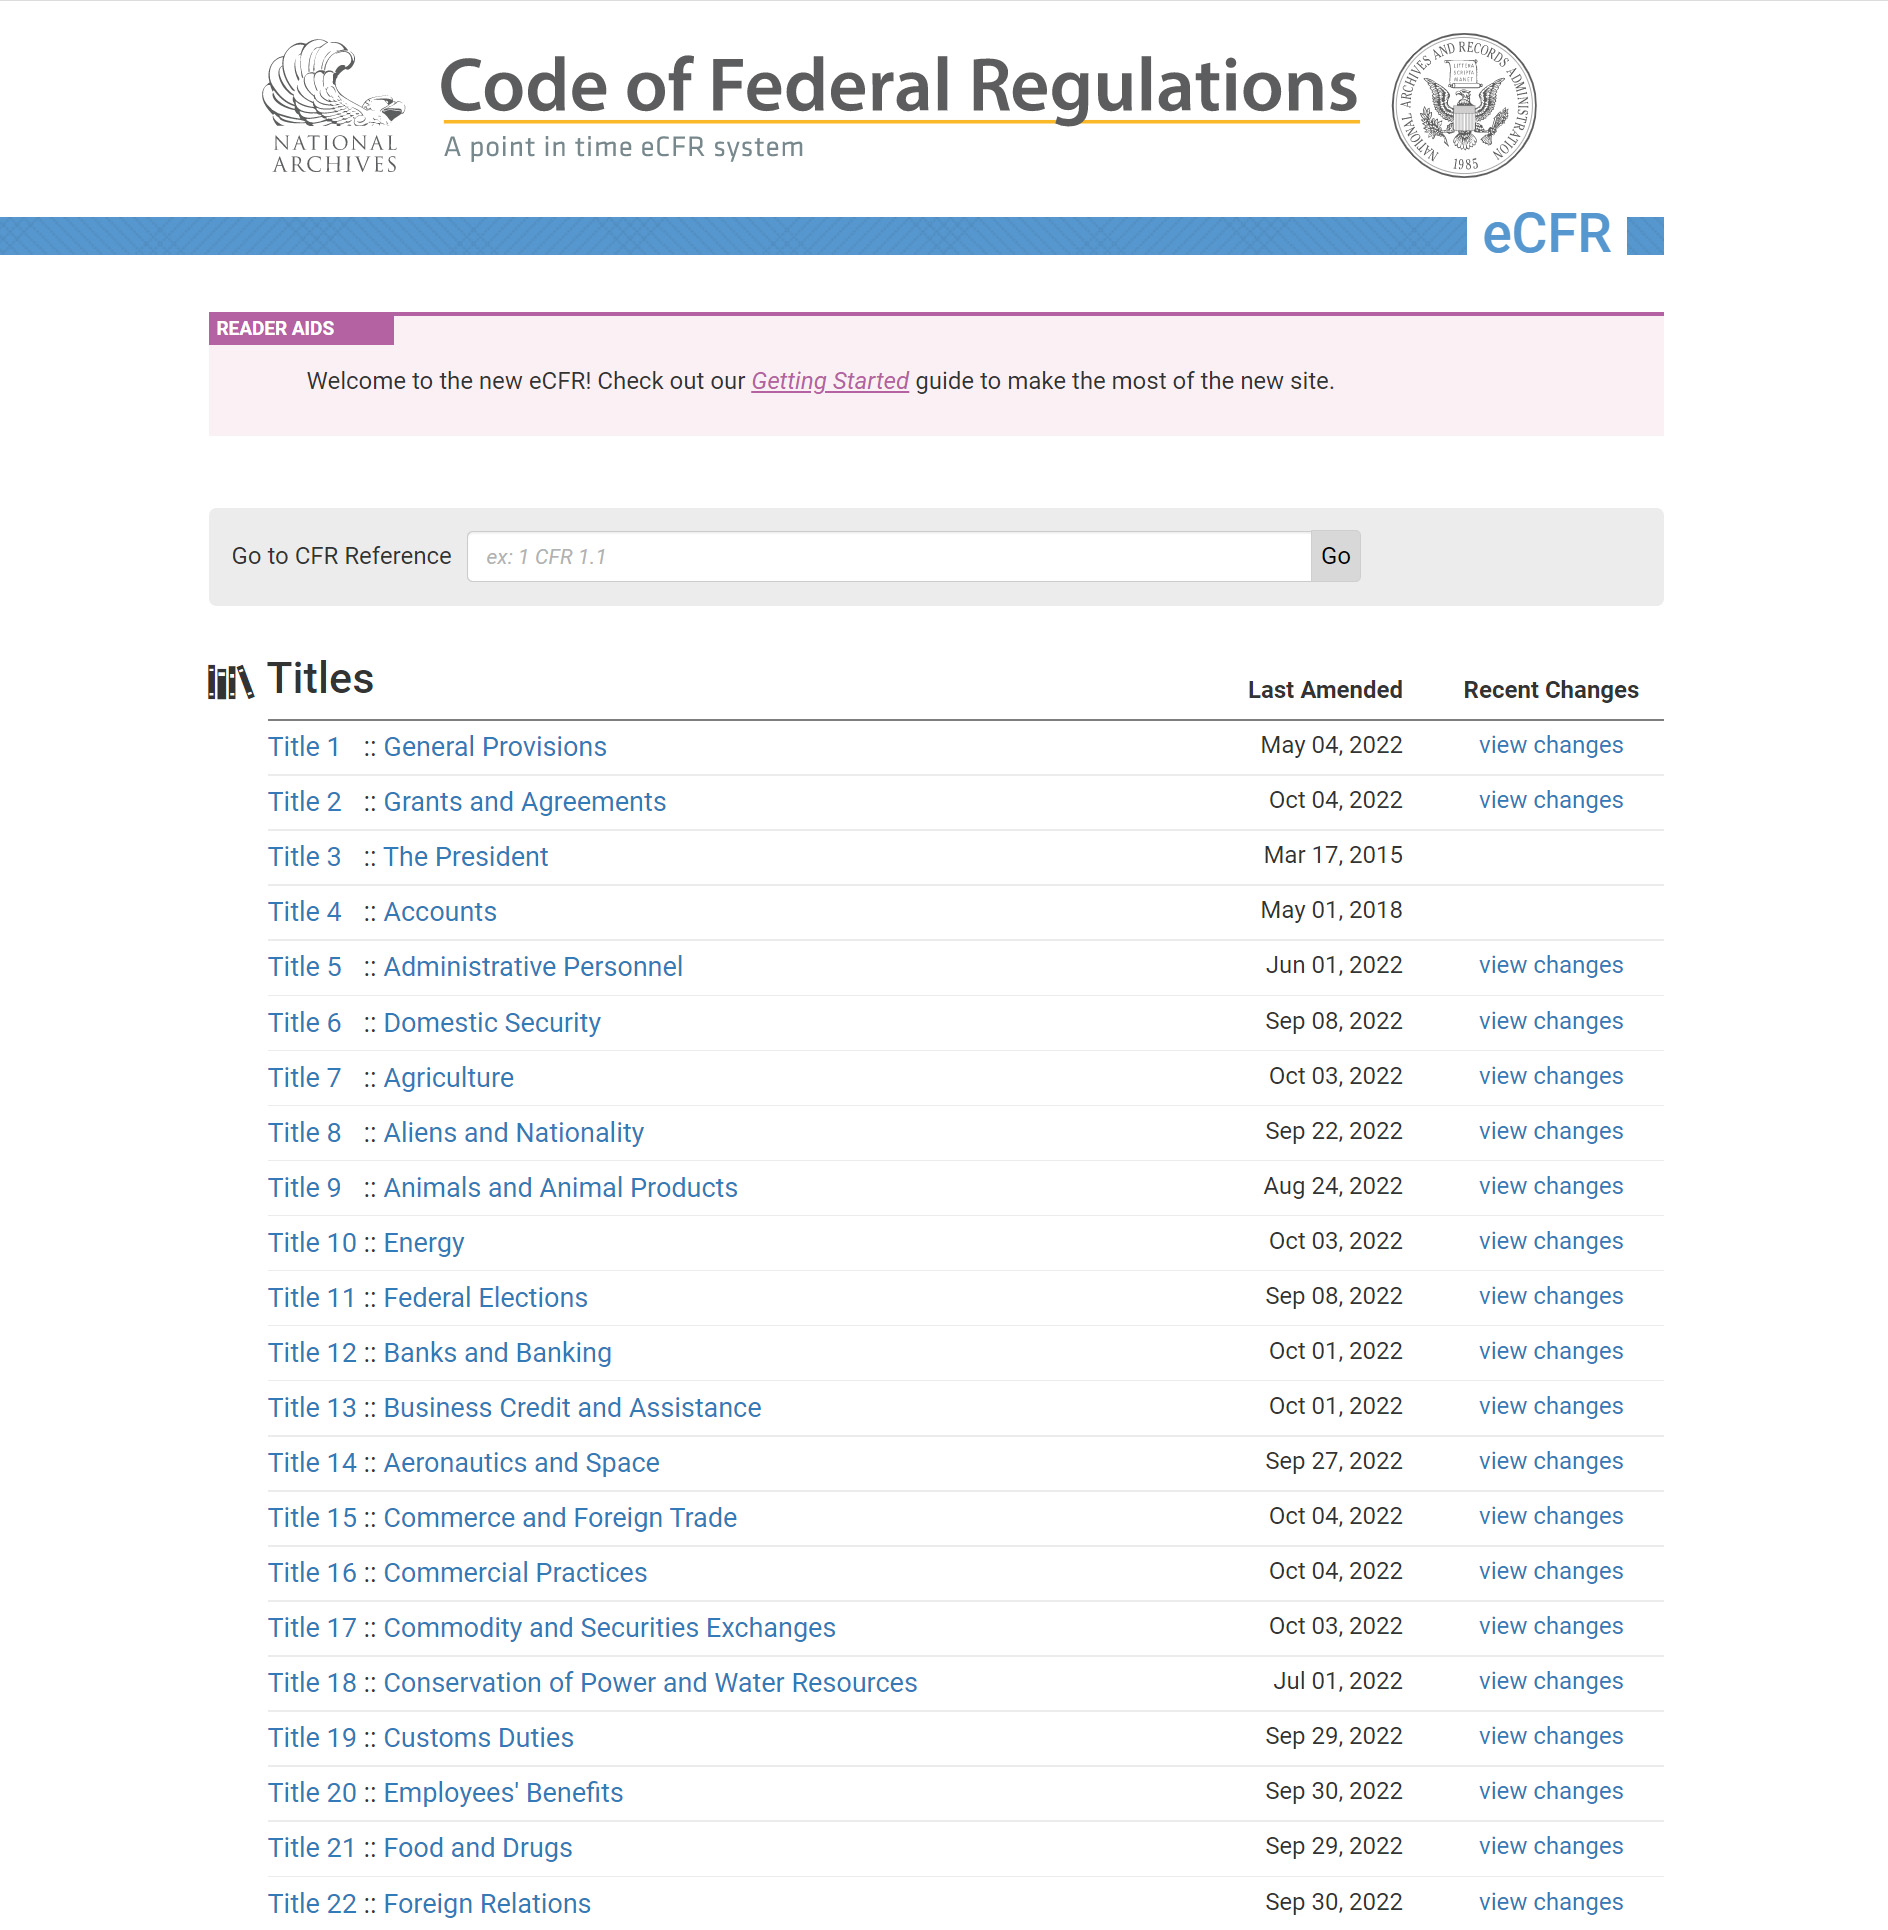 Code of Federal Regulations - Titles